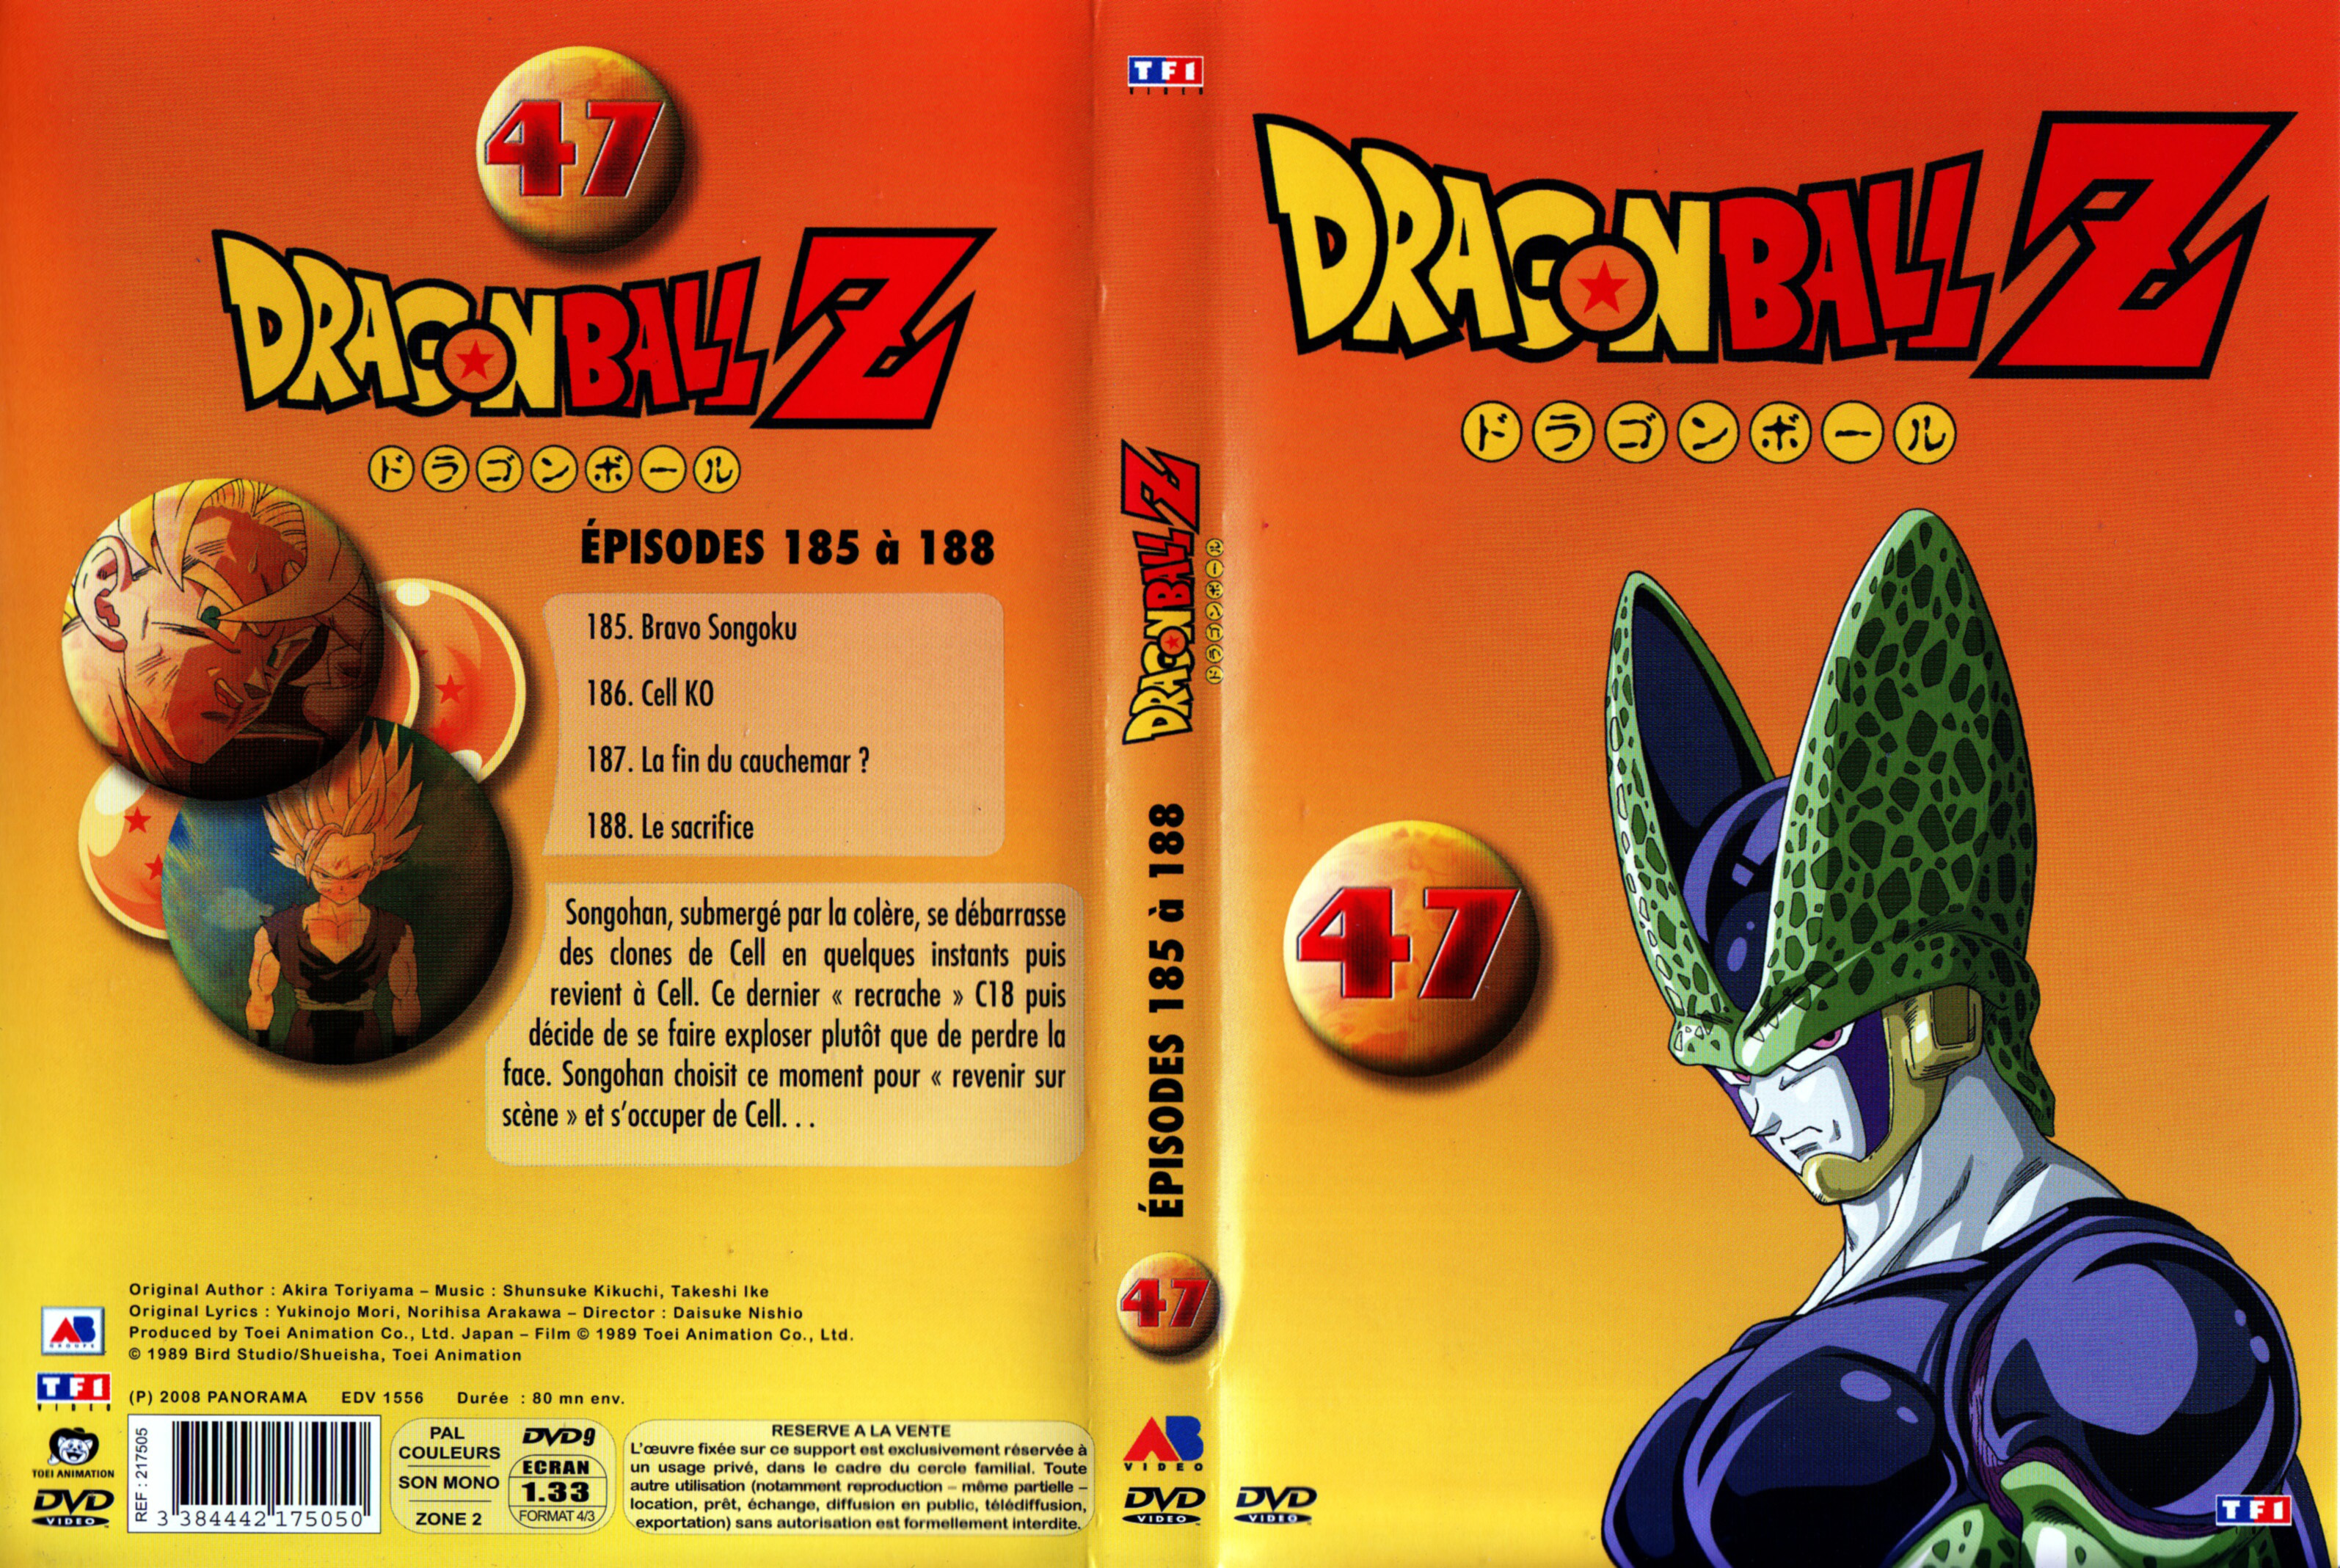 Jaquette DVD Dragon Ball Z vol 47